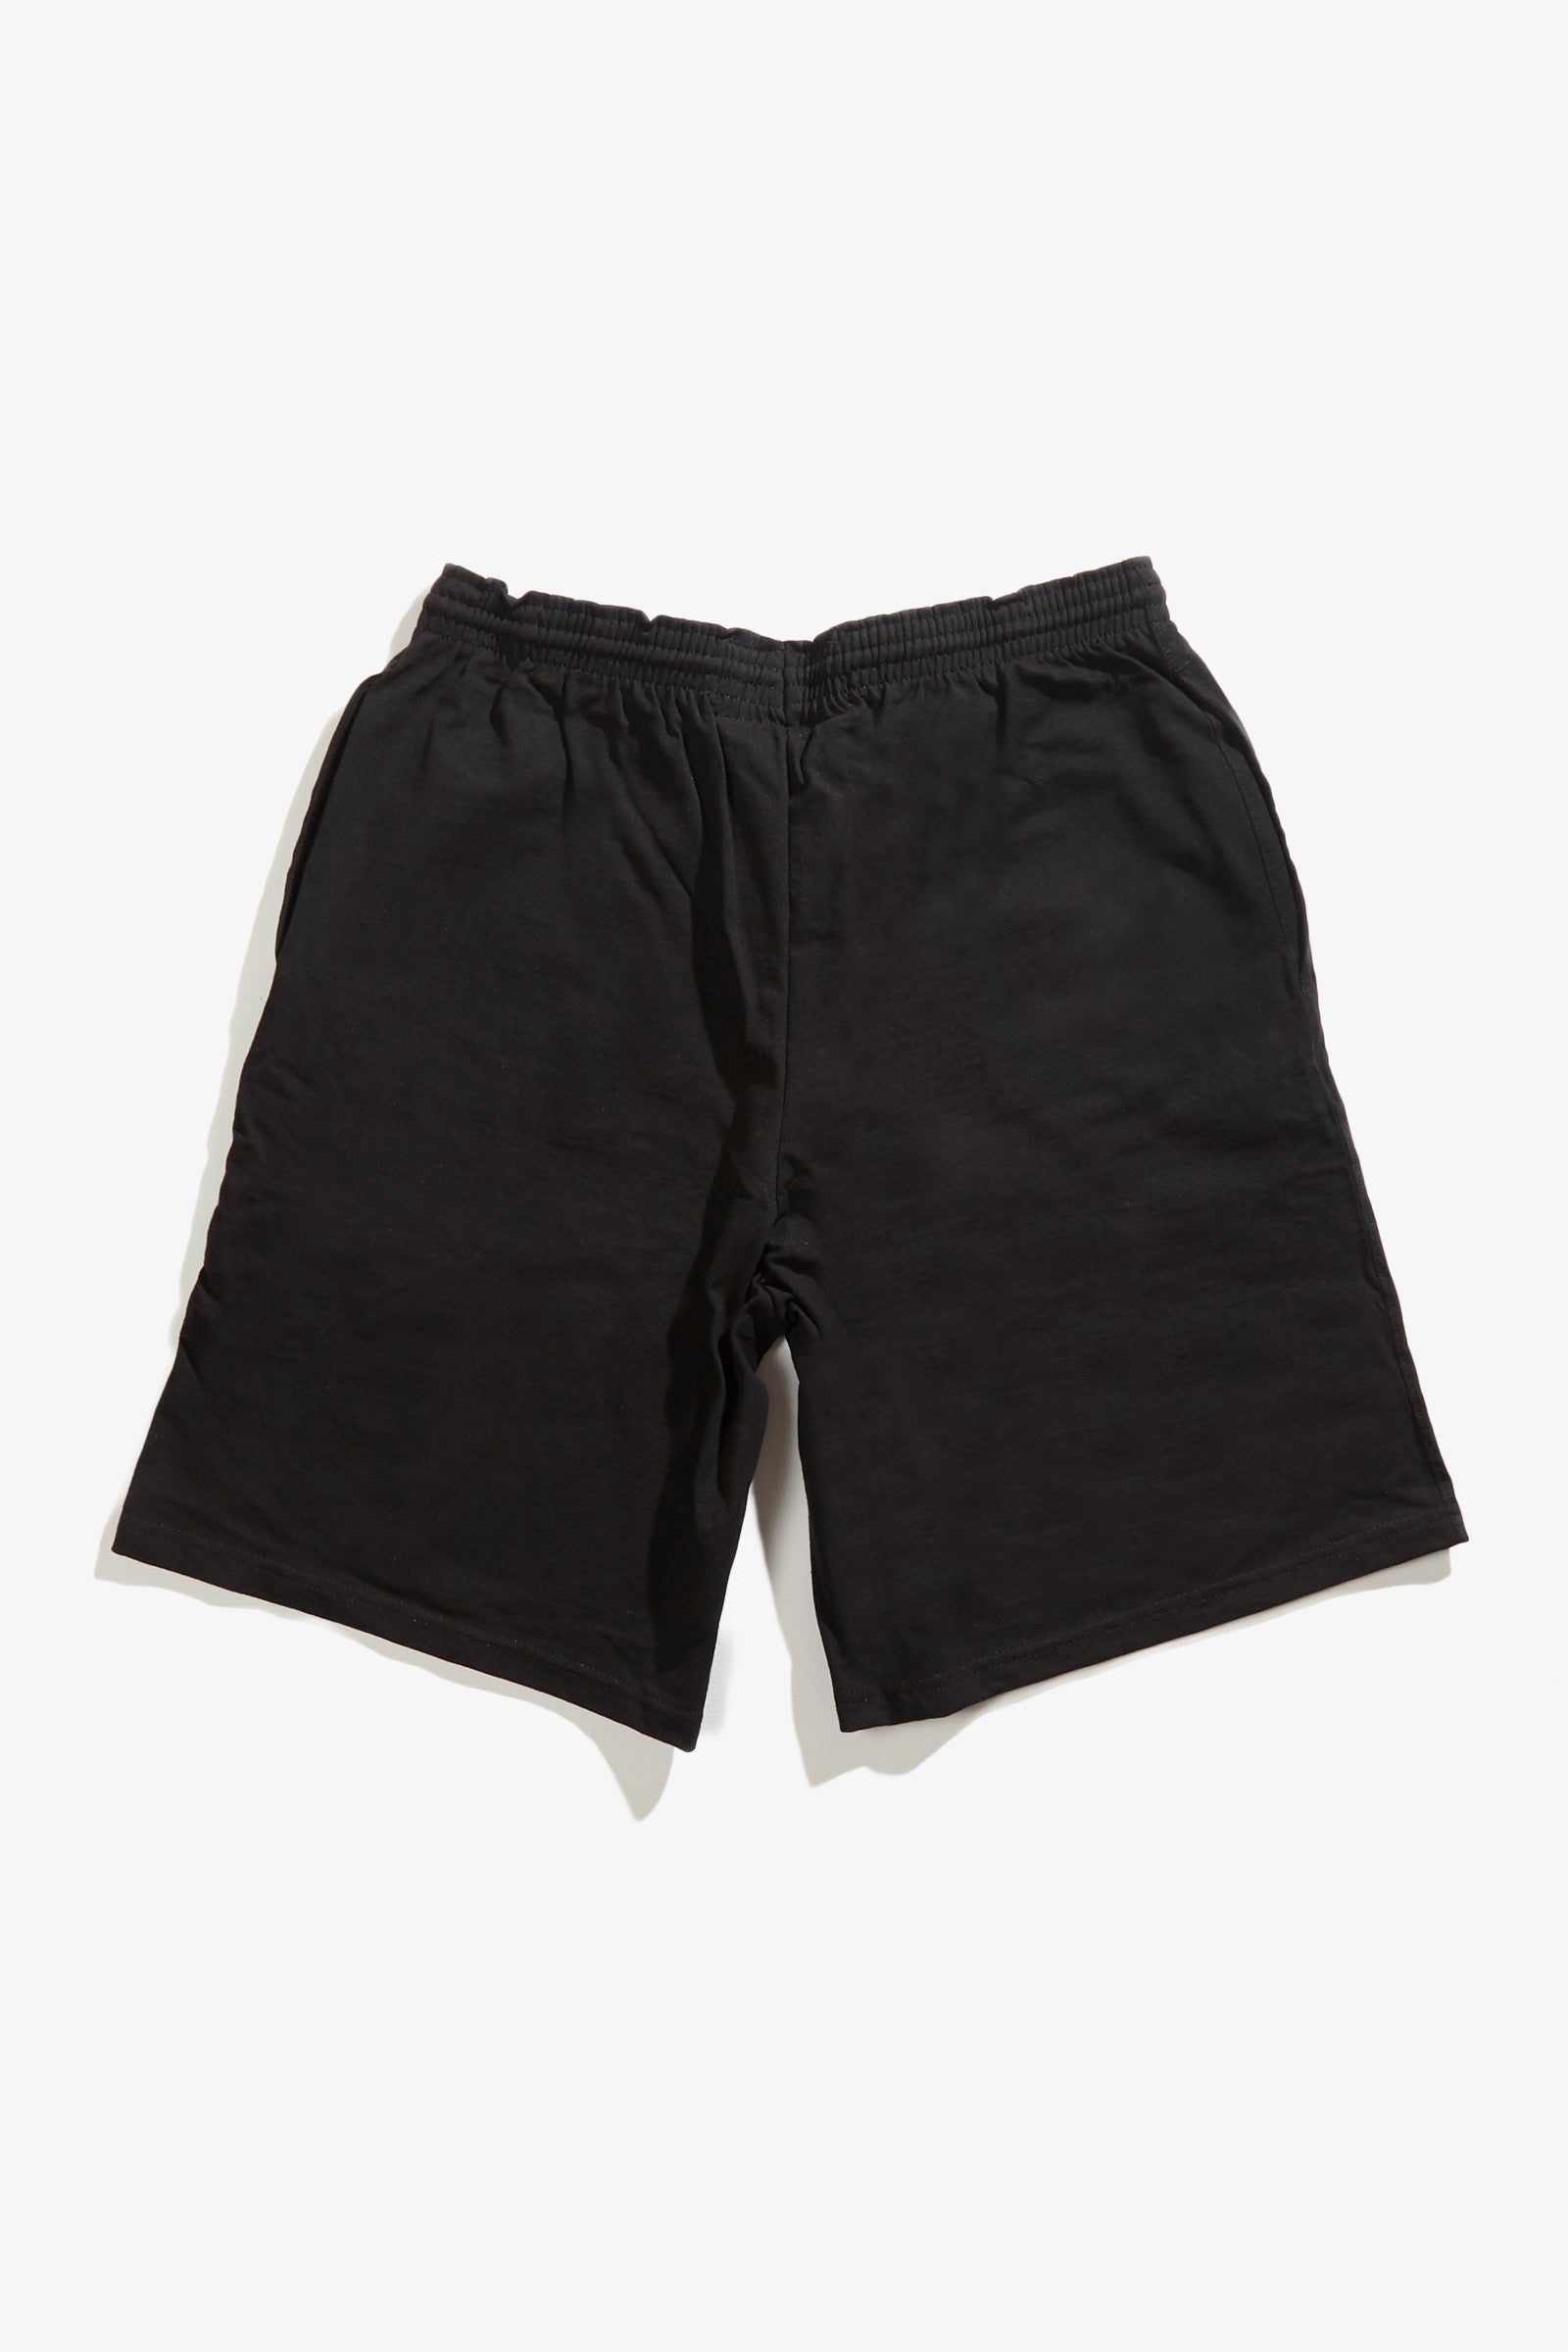 Champion - 8oz Cotton Gym Shorts - Black | Blacksmith Store